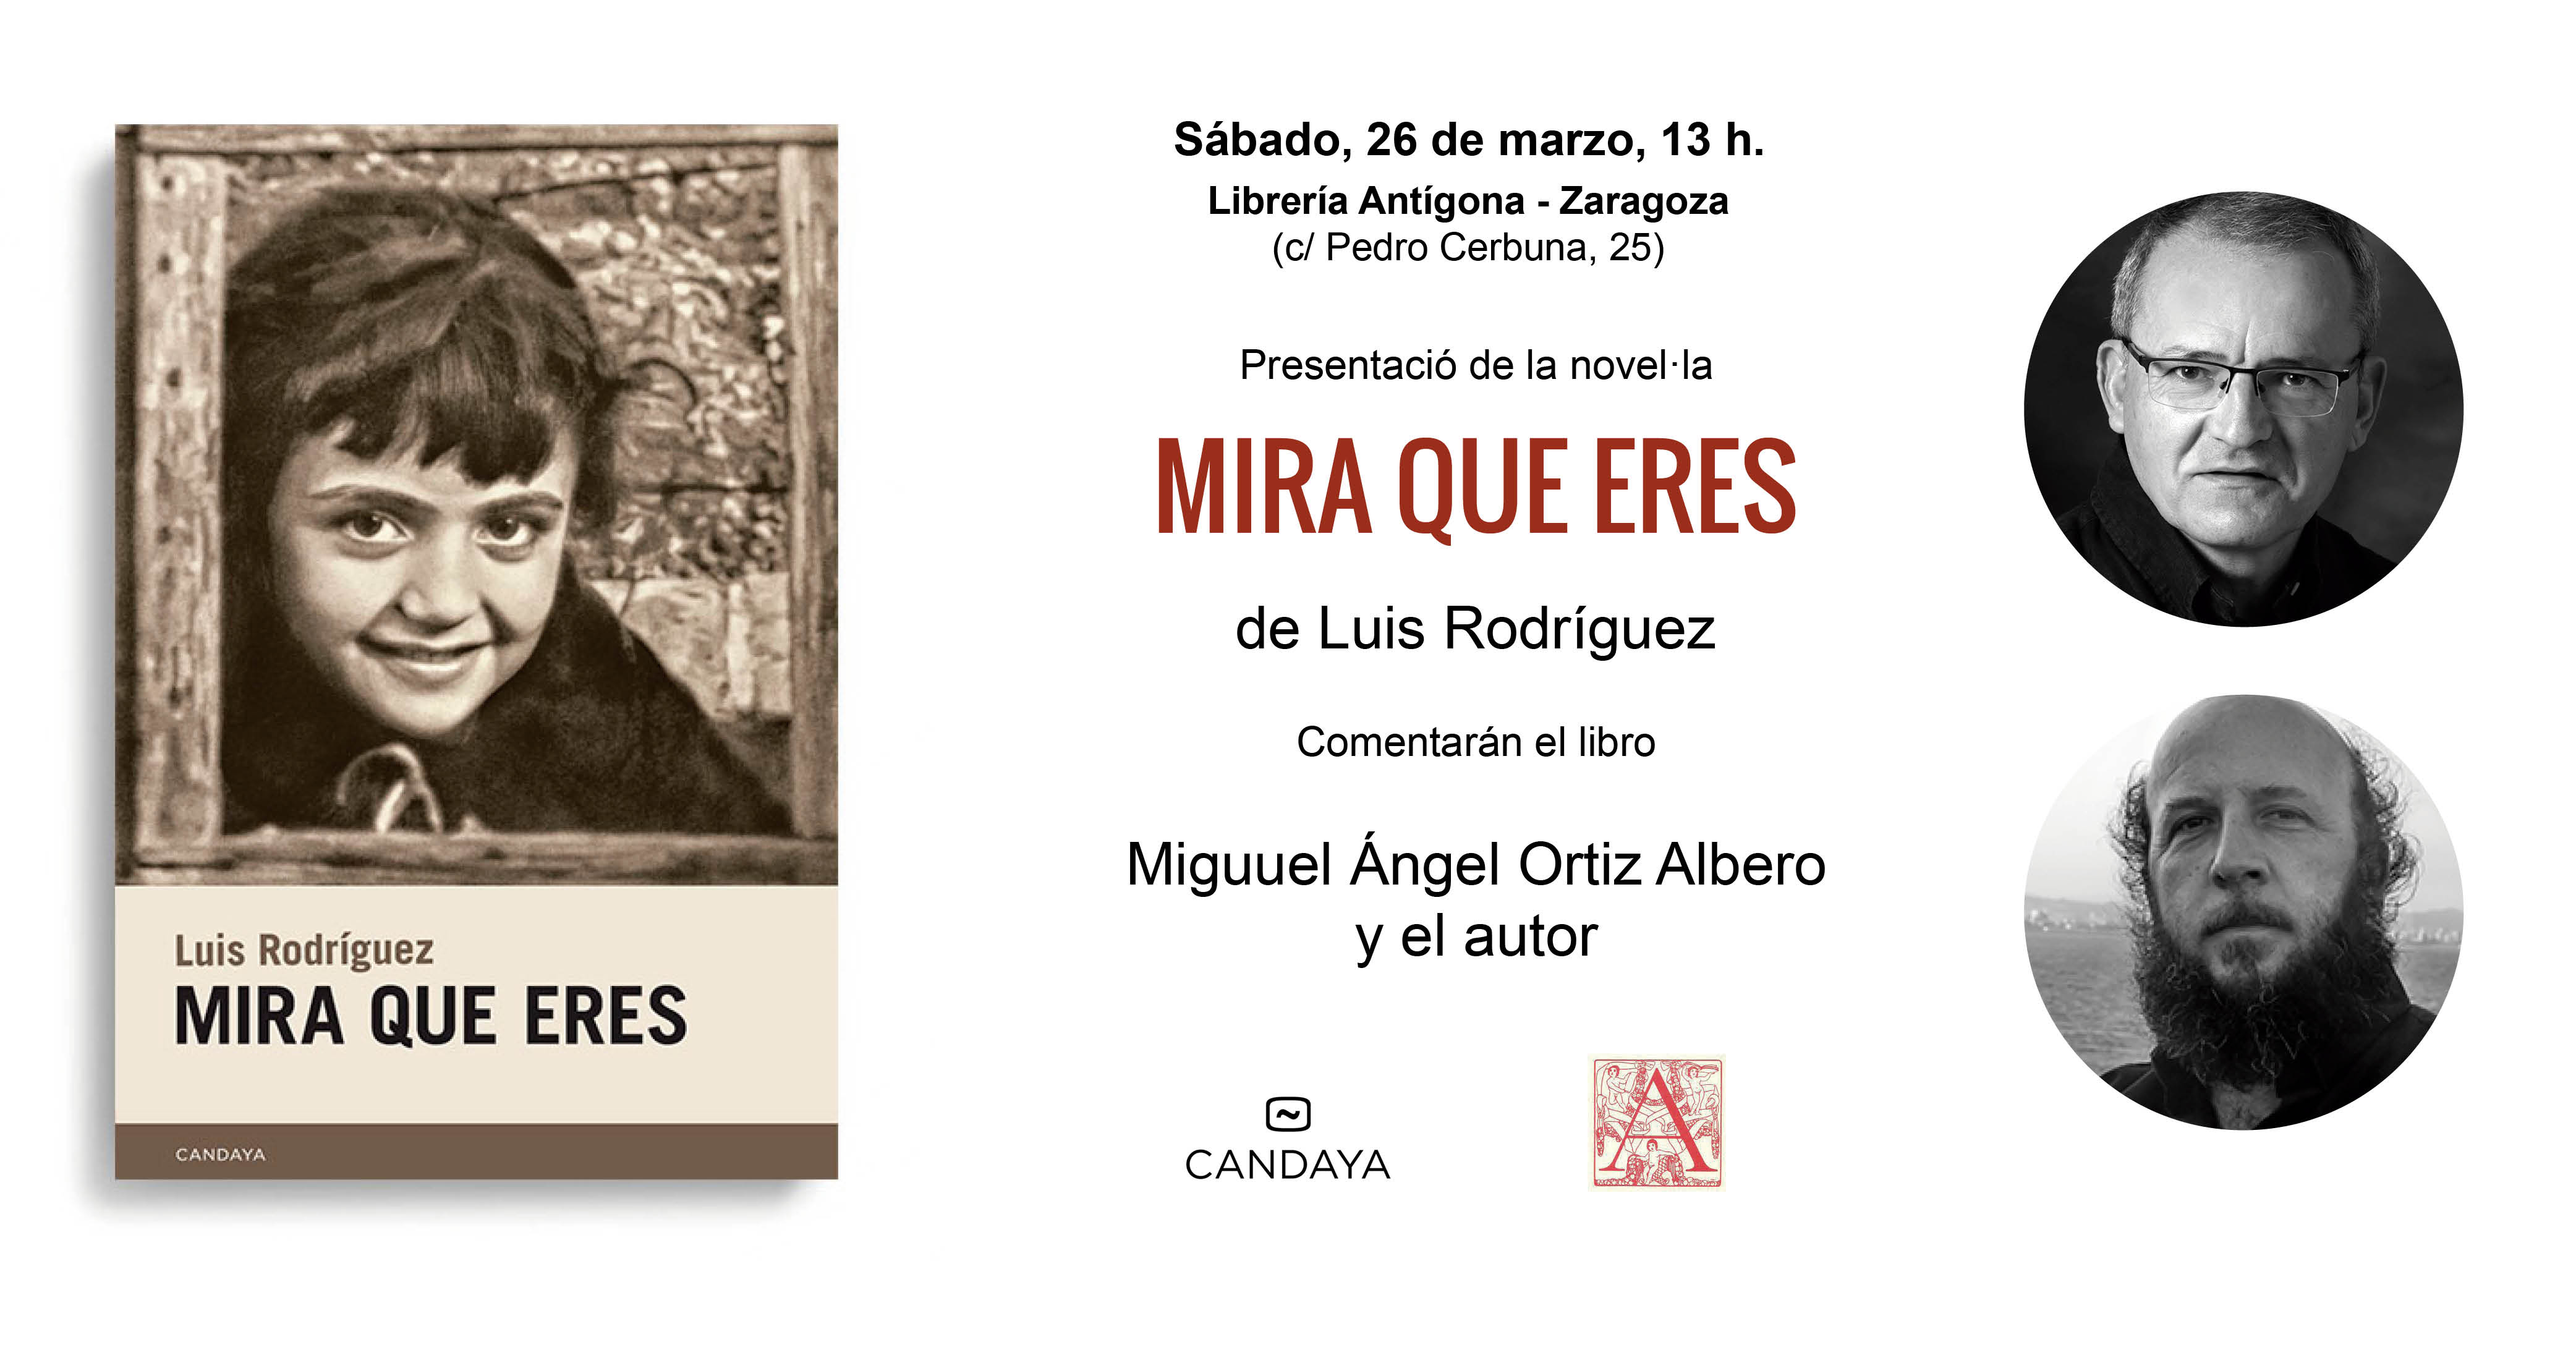 Luis Rodríguez presenta Mira que eres